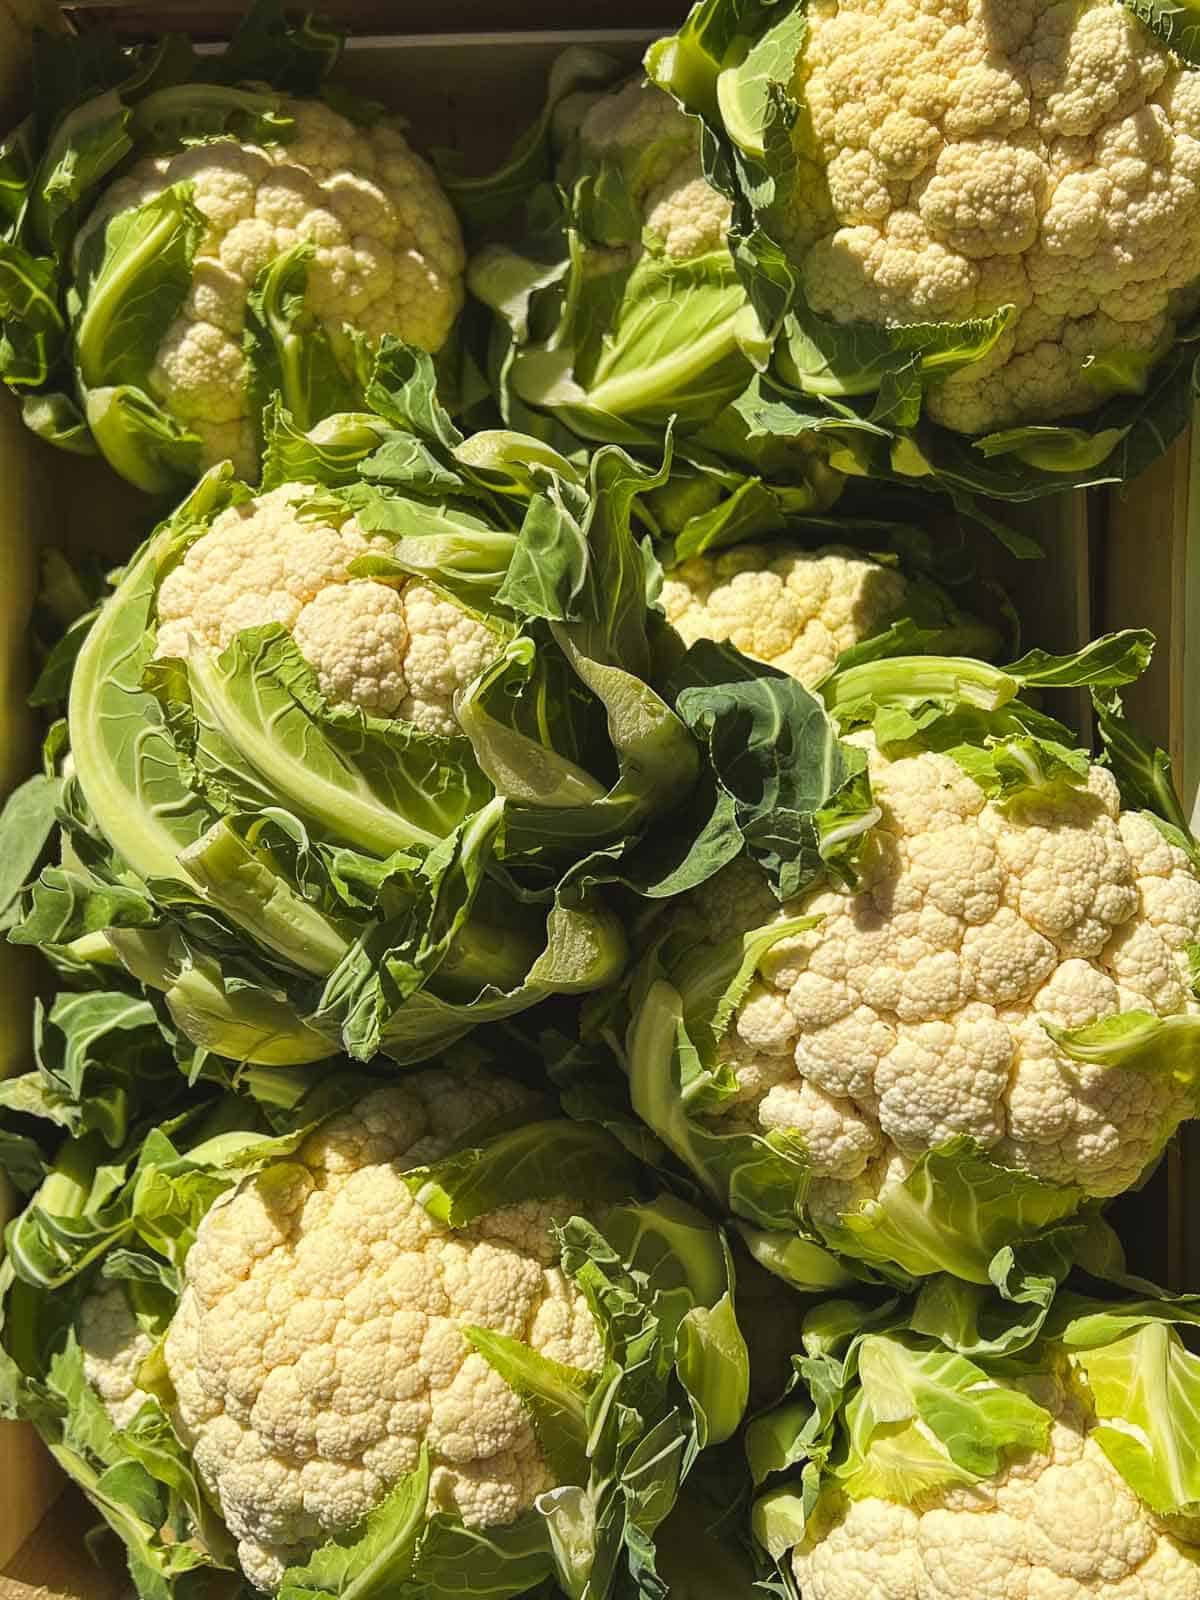 cauliflower in boxes in local market.